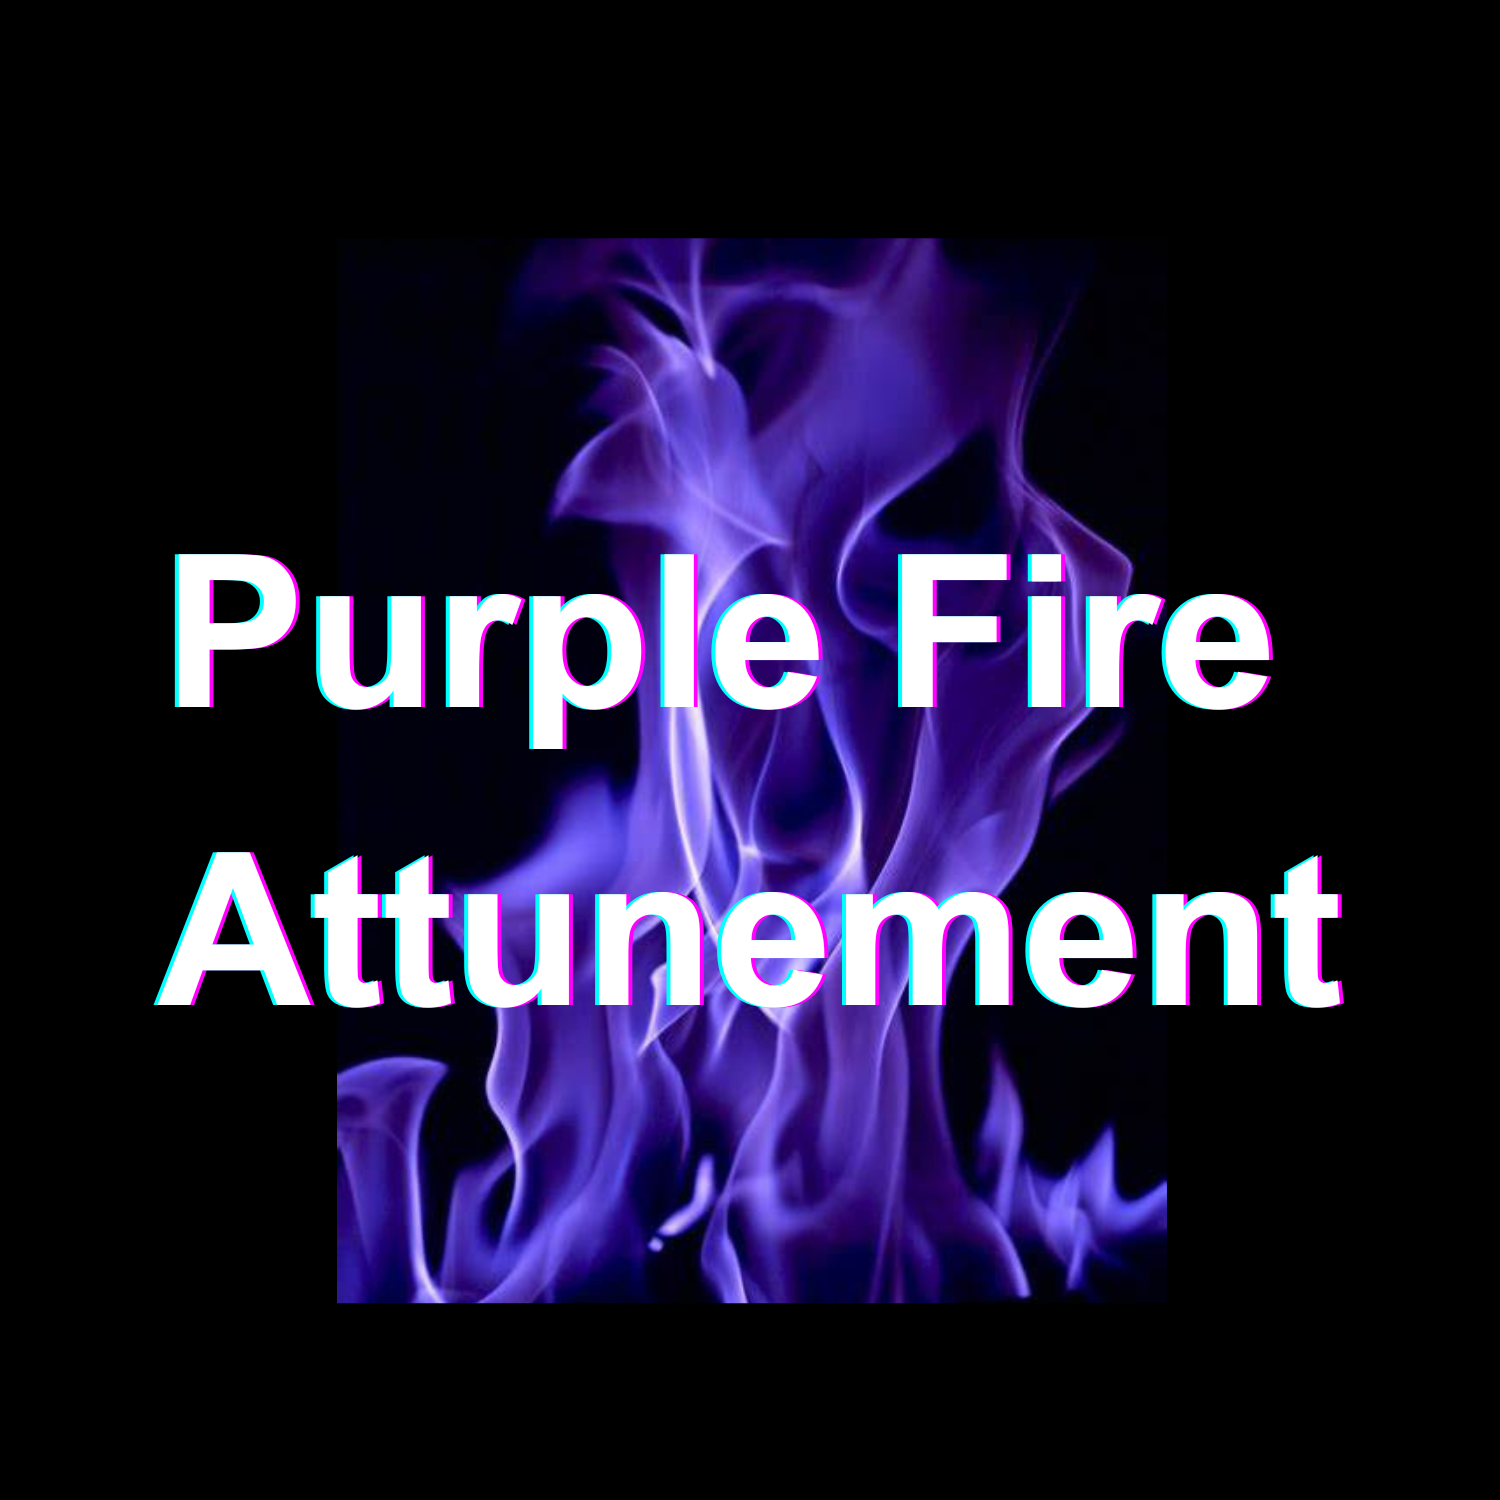 Purple Fire Attunement Reiki DMT OBE Lucid Dreaming Physical Healing Spirit Communication Energy Reiki Session